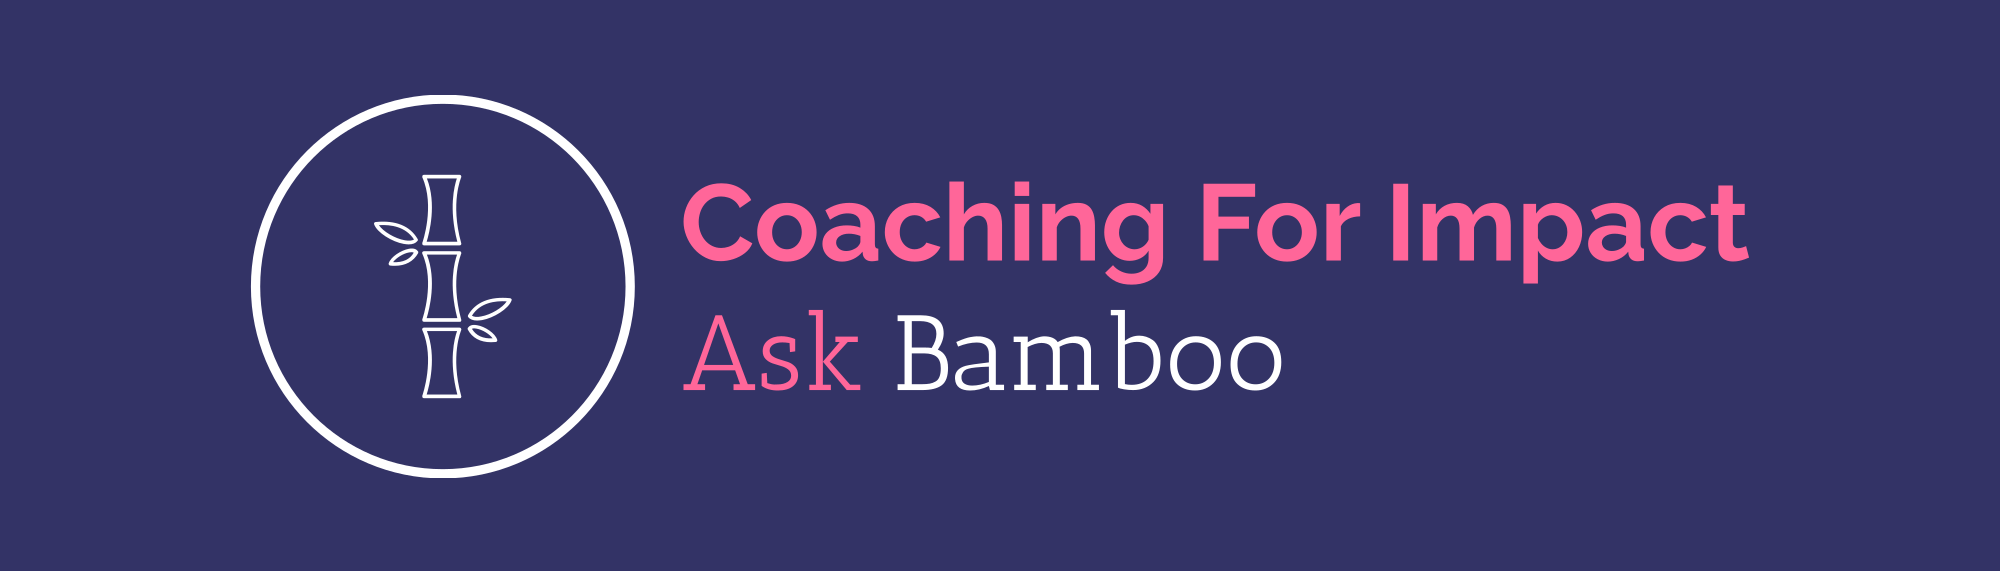 Coaching For Impact - Ask Bamboo